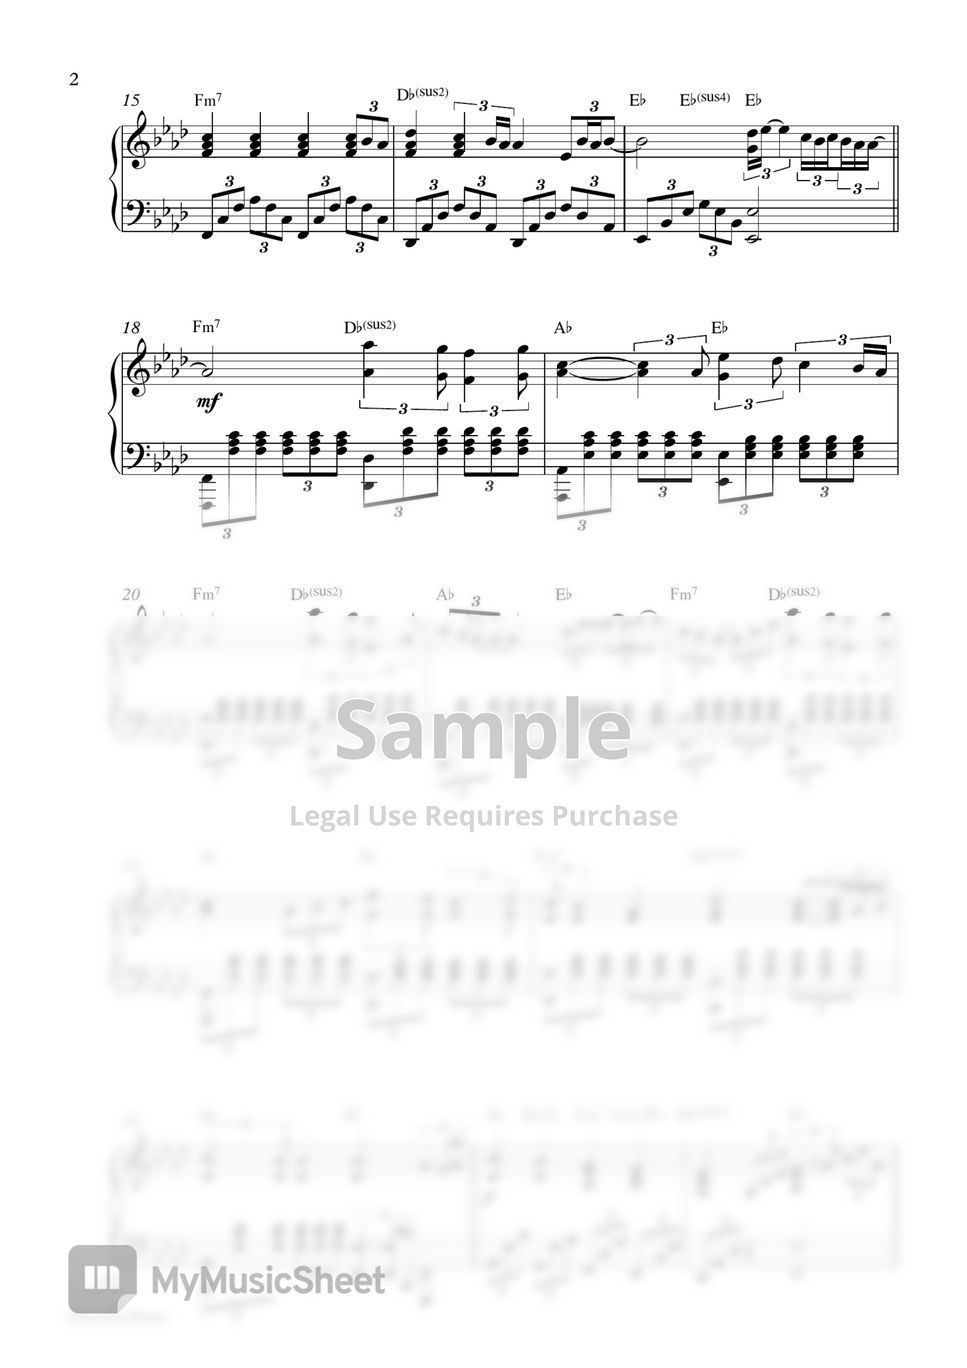 Ed Sheeran - Perfect (Piano Sheet) by Pianella Piano